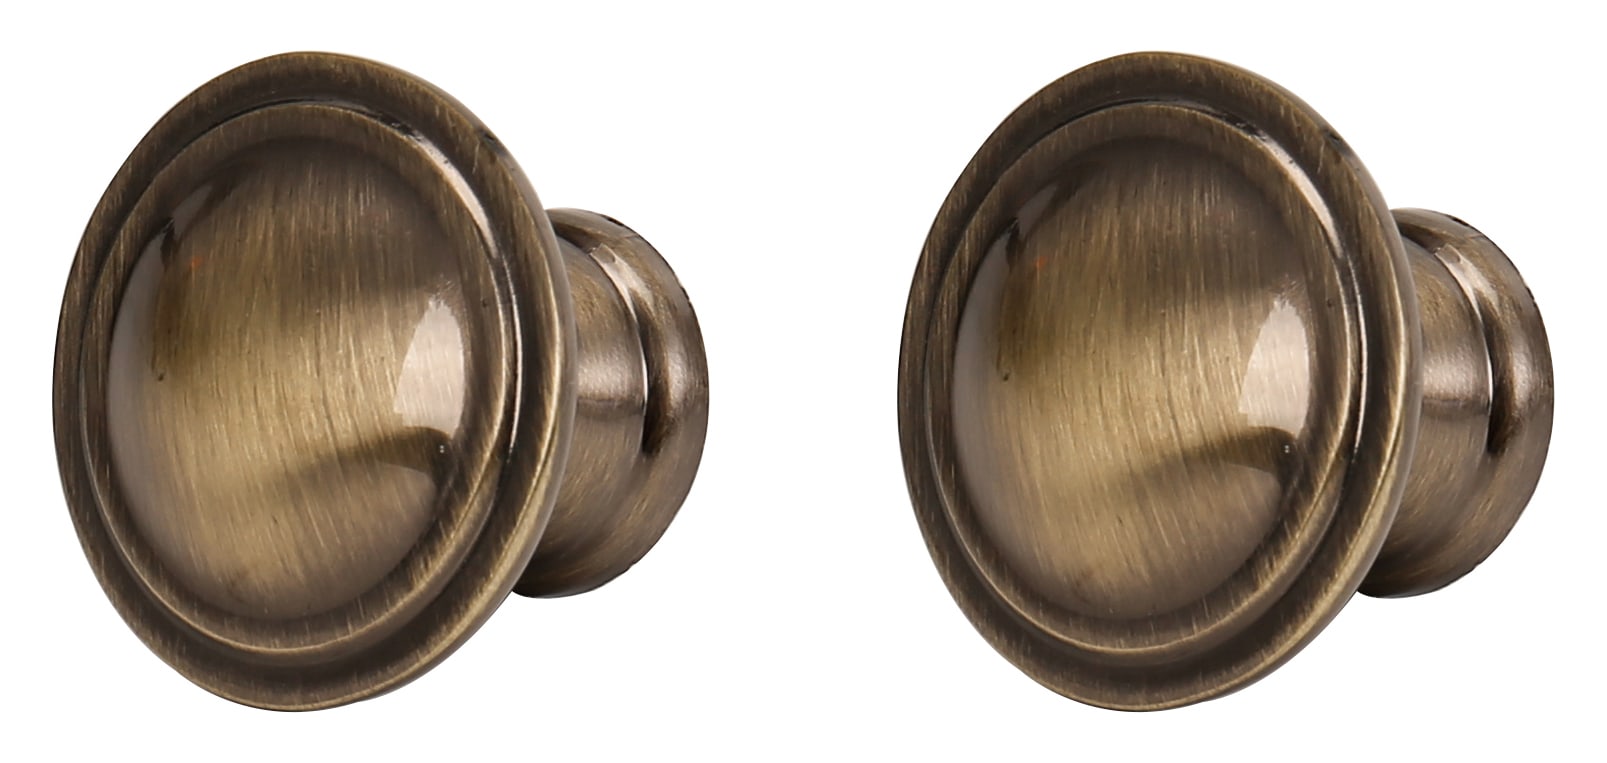 Ring Door Knob Antique Brass 35mm - Pack of 6 | Wickes.co.uk